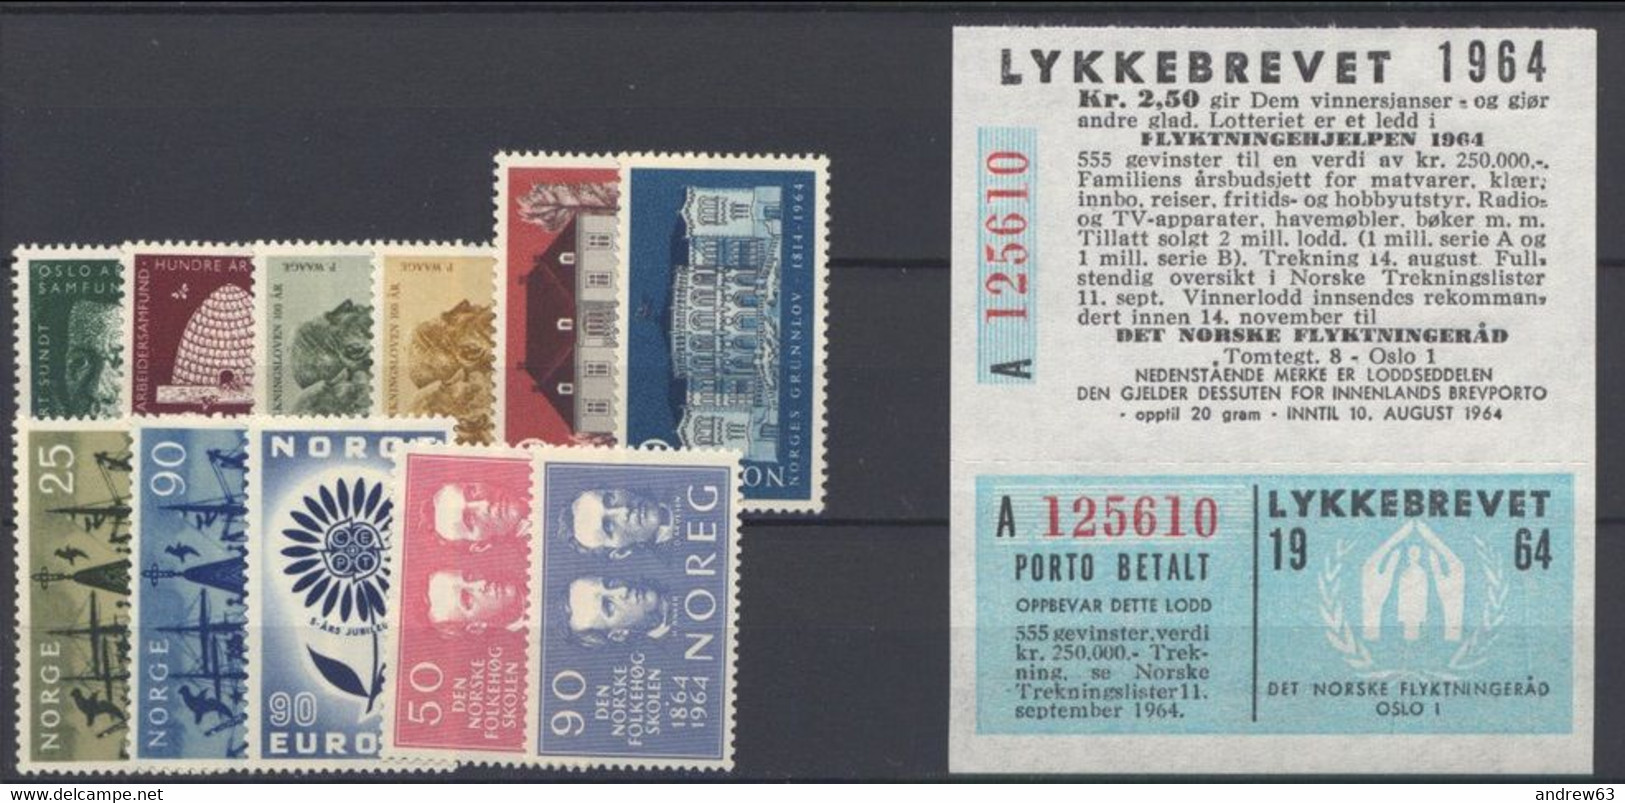 NORVEGIA - Norge - Norwegen - Norway - 1964 With Lykkebrevet - Annata Completa / Complete Year **/MNH VF - New - Full Years